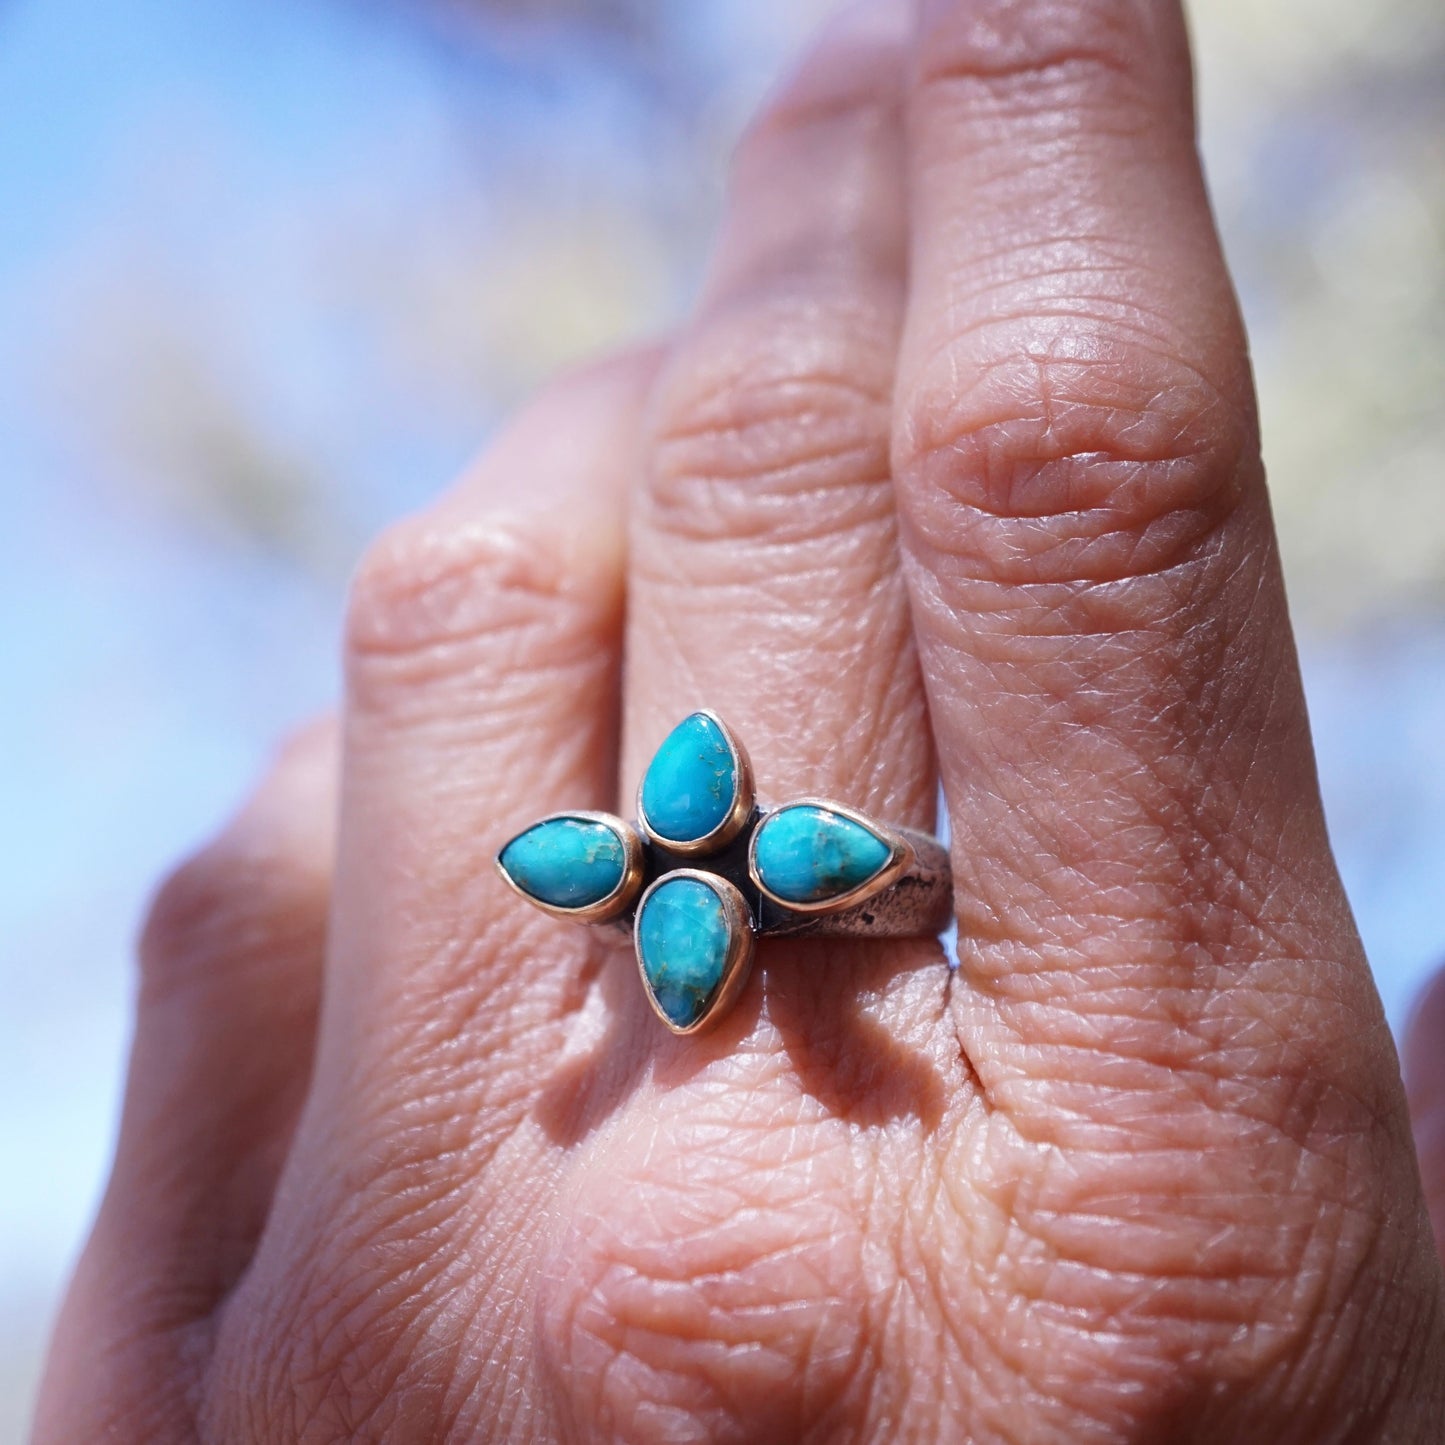 sandcast flower burst ring with blue ridge turquoise and 14k GOLD bezels - size 6 - Lumenrose